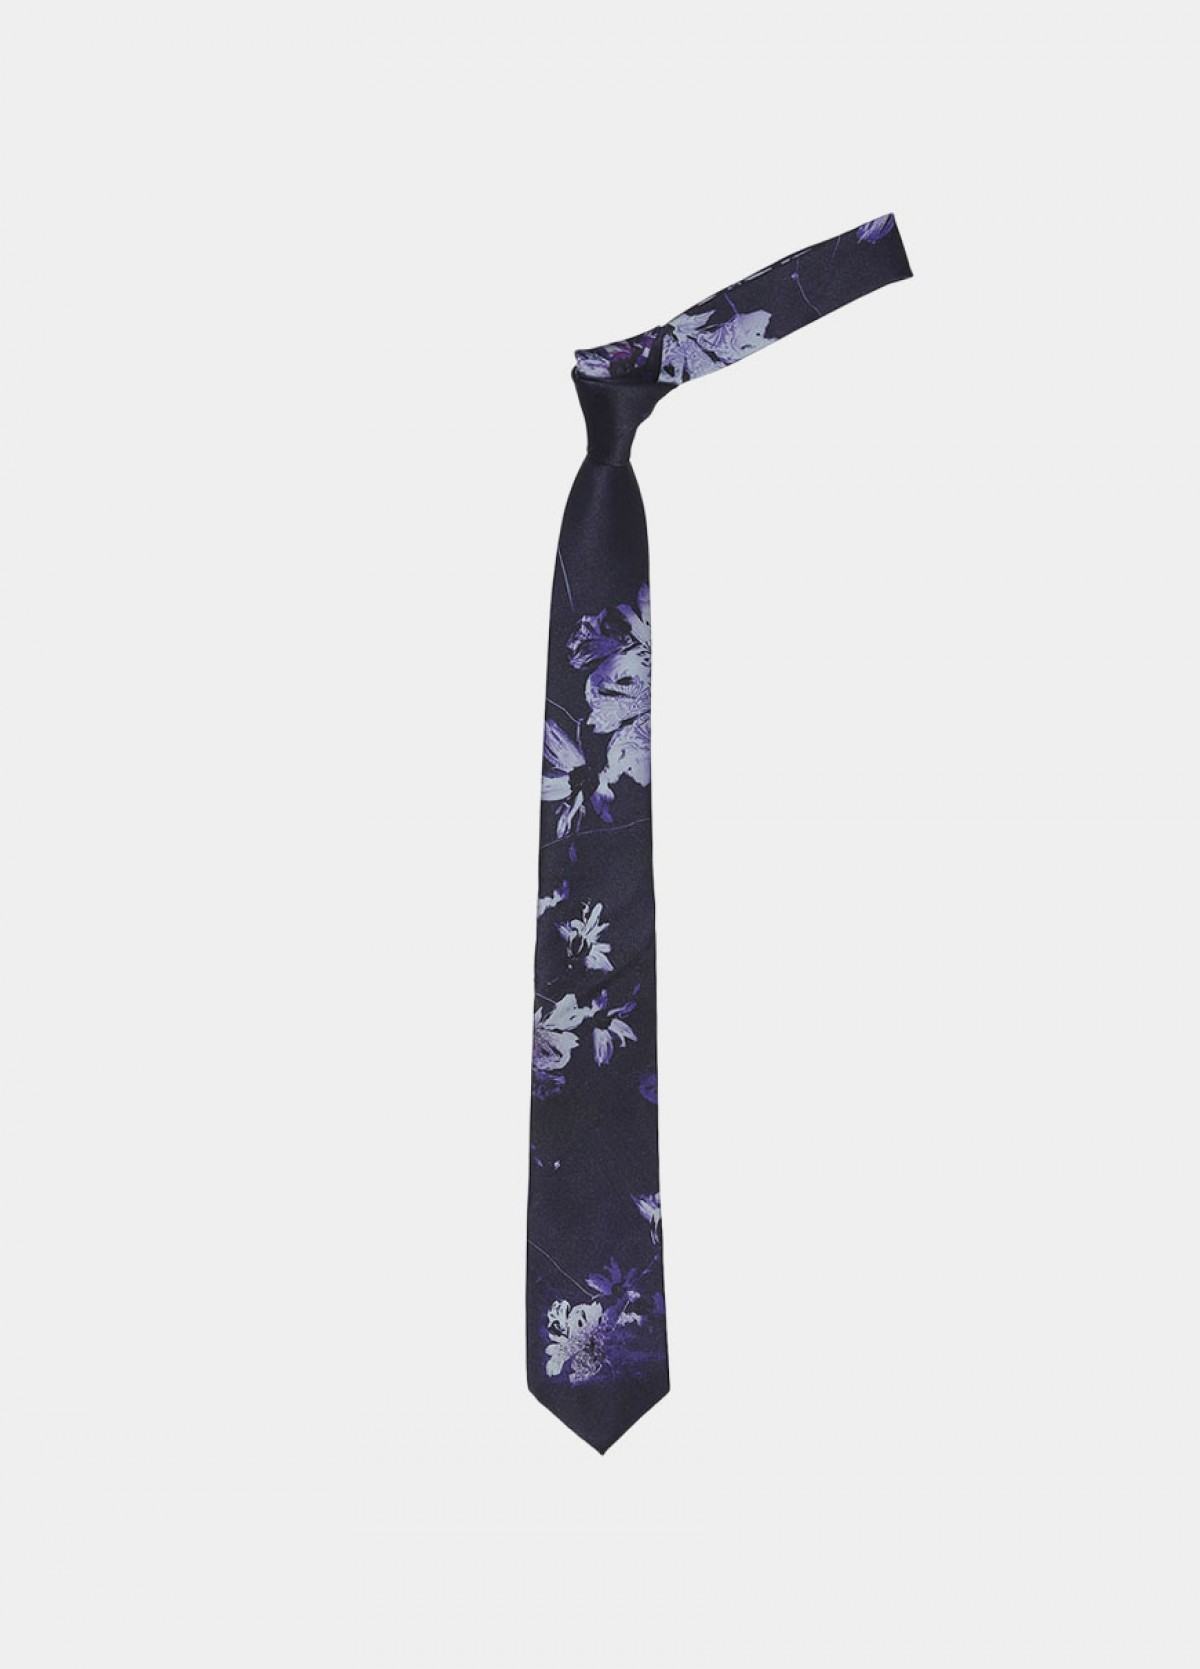 The Royal Blue Signature Tie